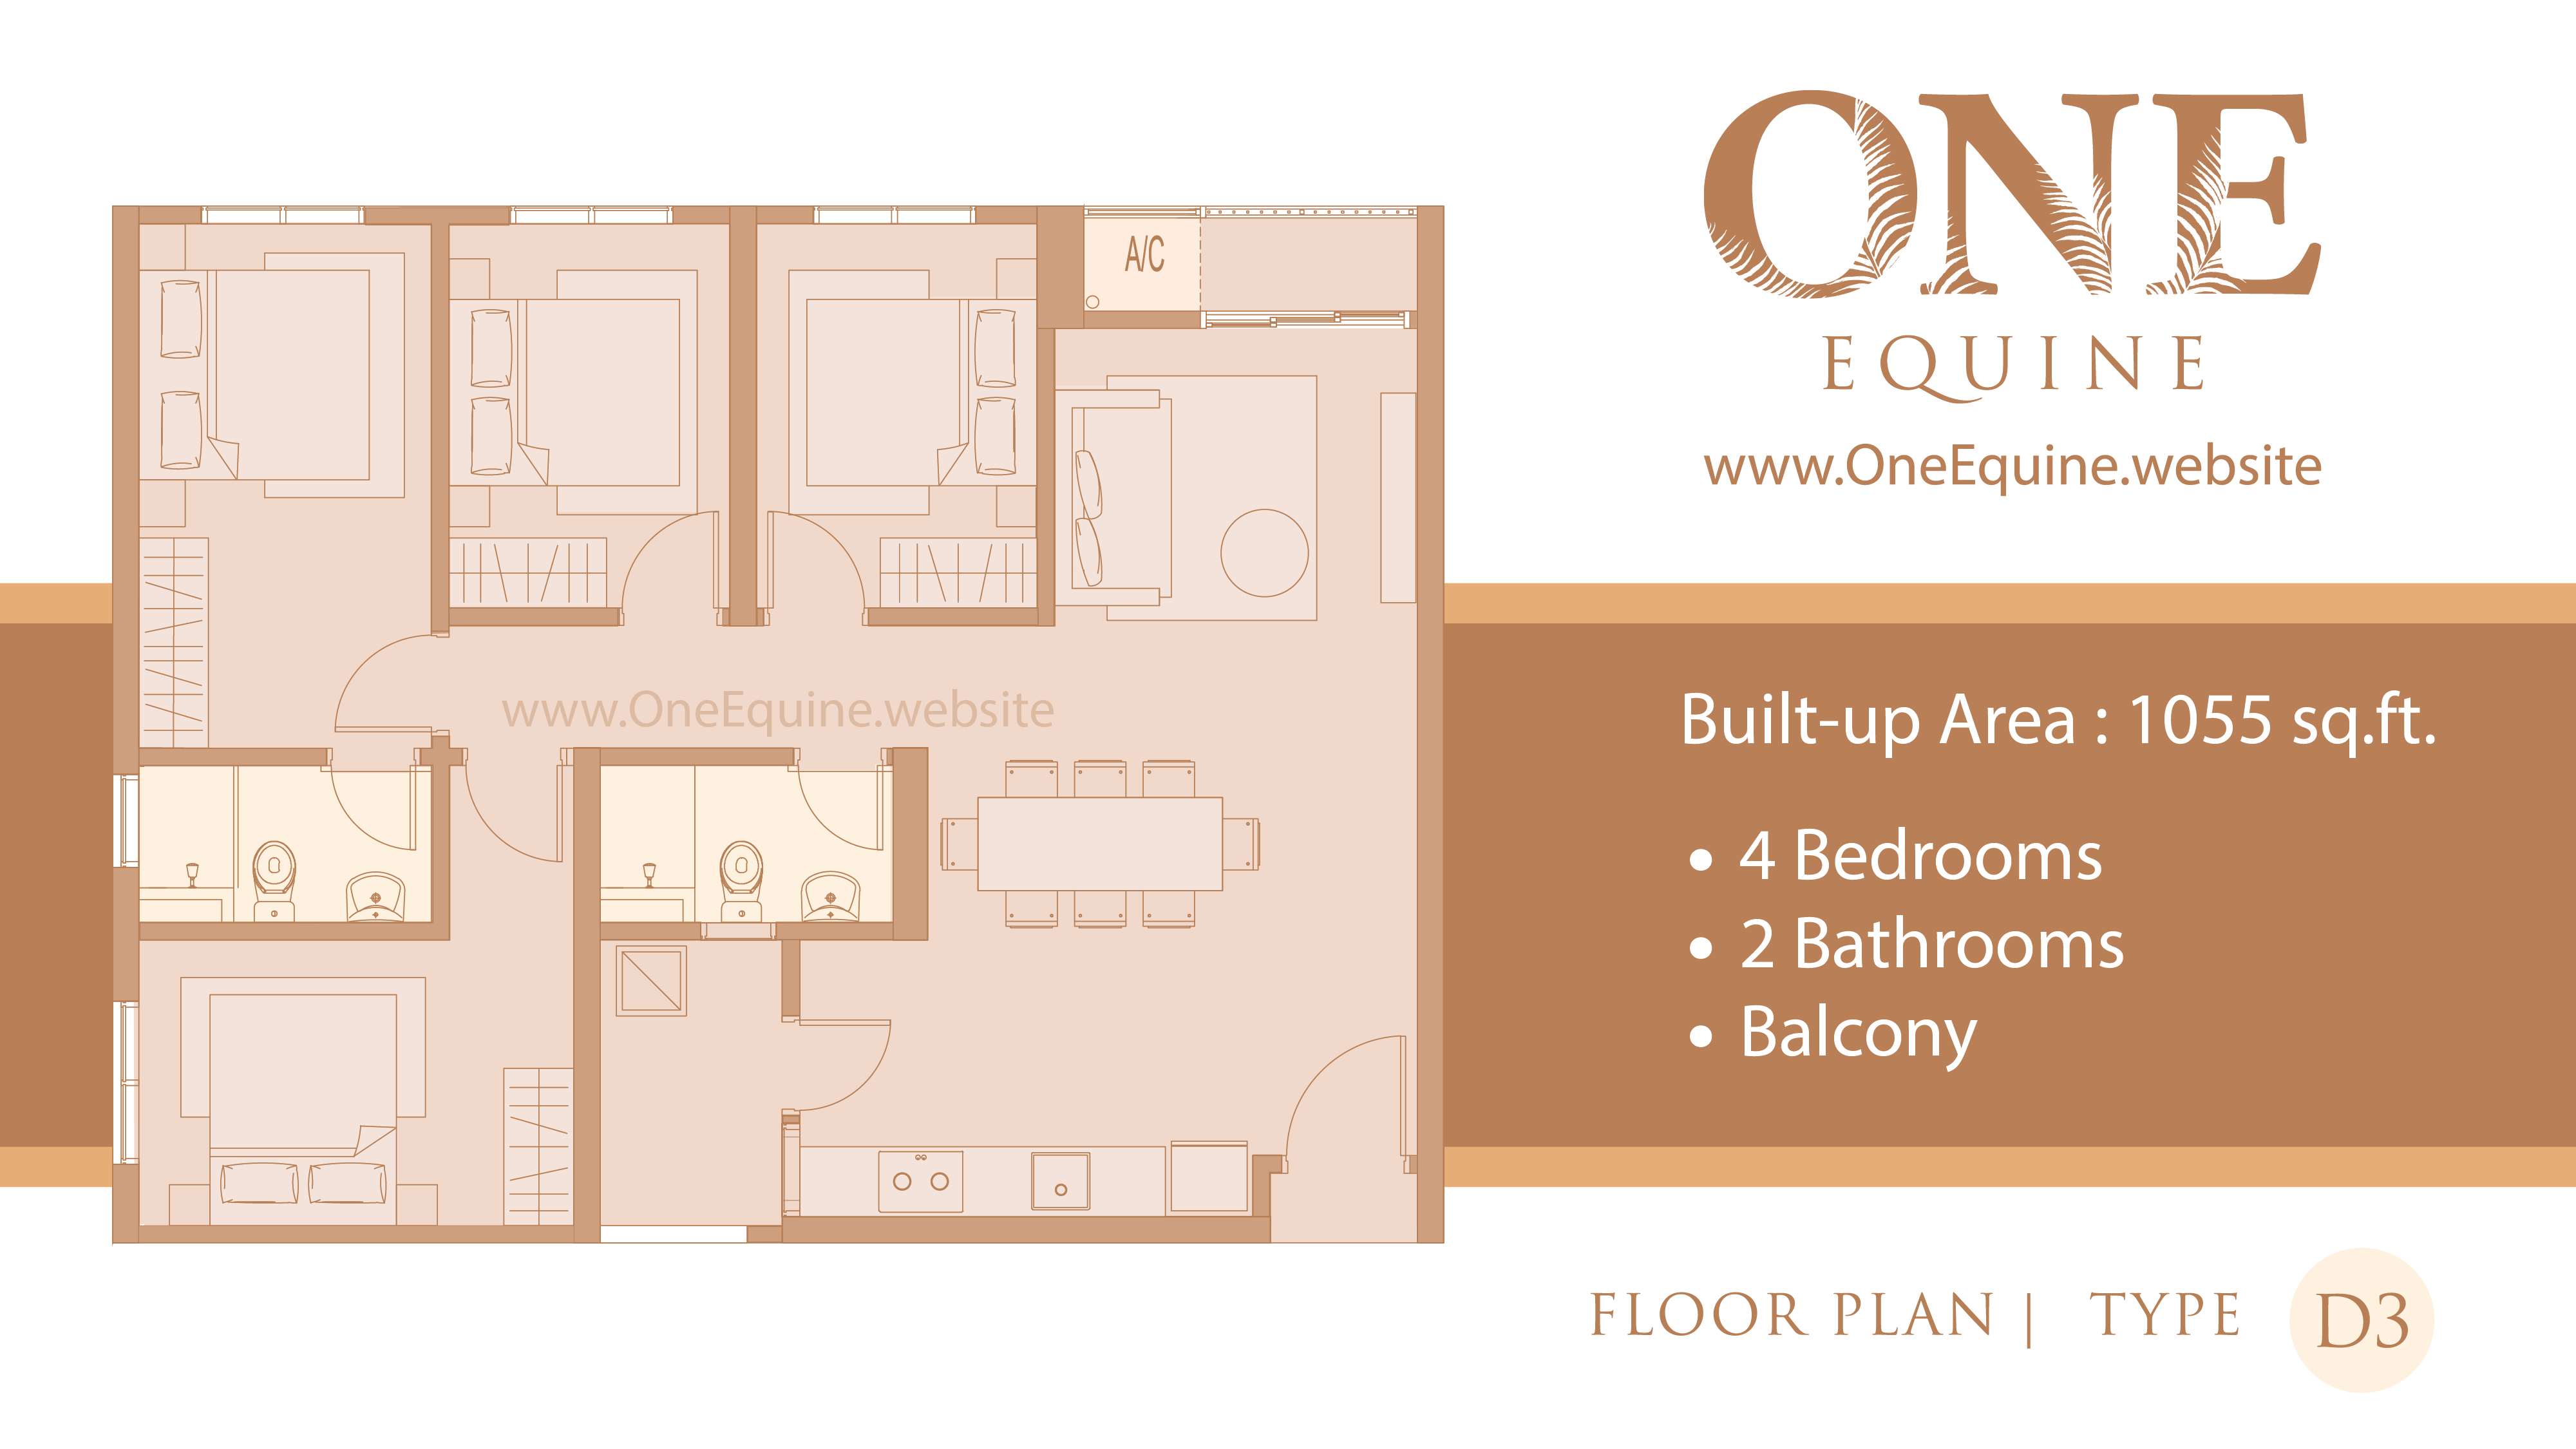 One Equine Park Seri Kembangan - Serviced Apartment 4 Bedrooms 2 Bathrooms Balcony - Floor Plan Type D3 - 1055 sqft